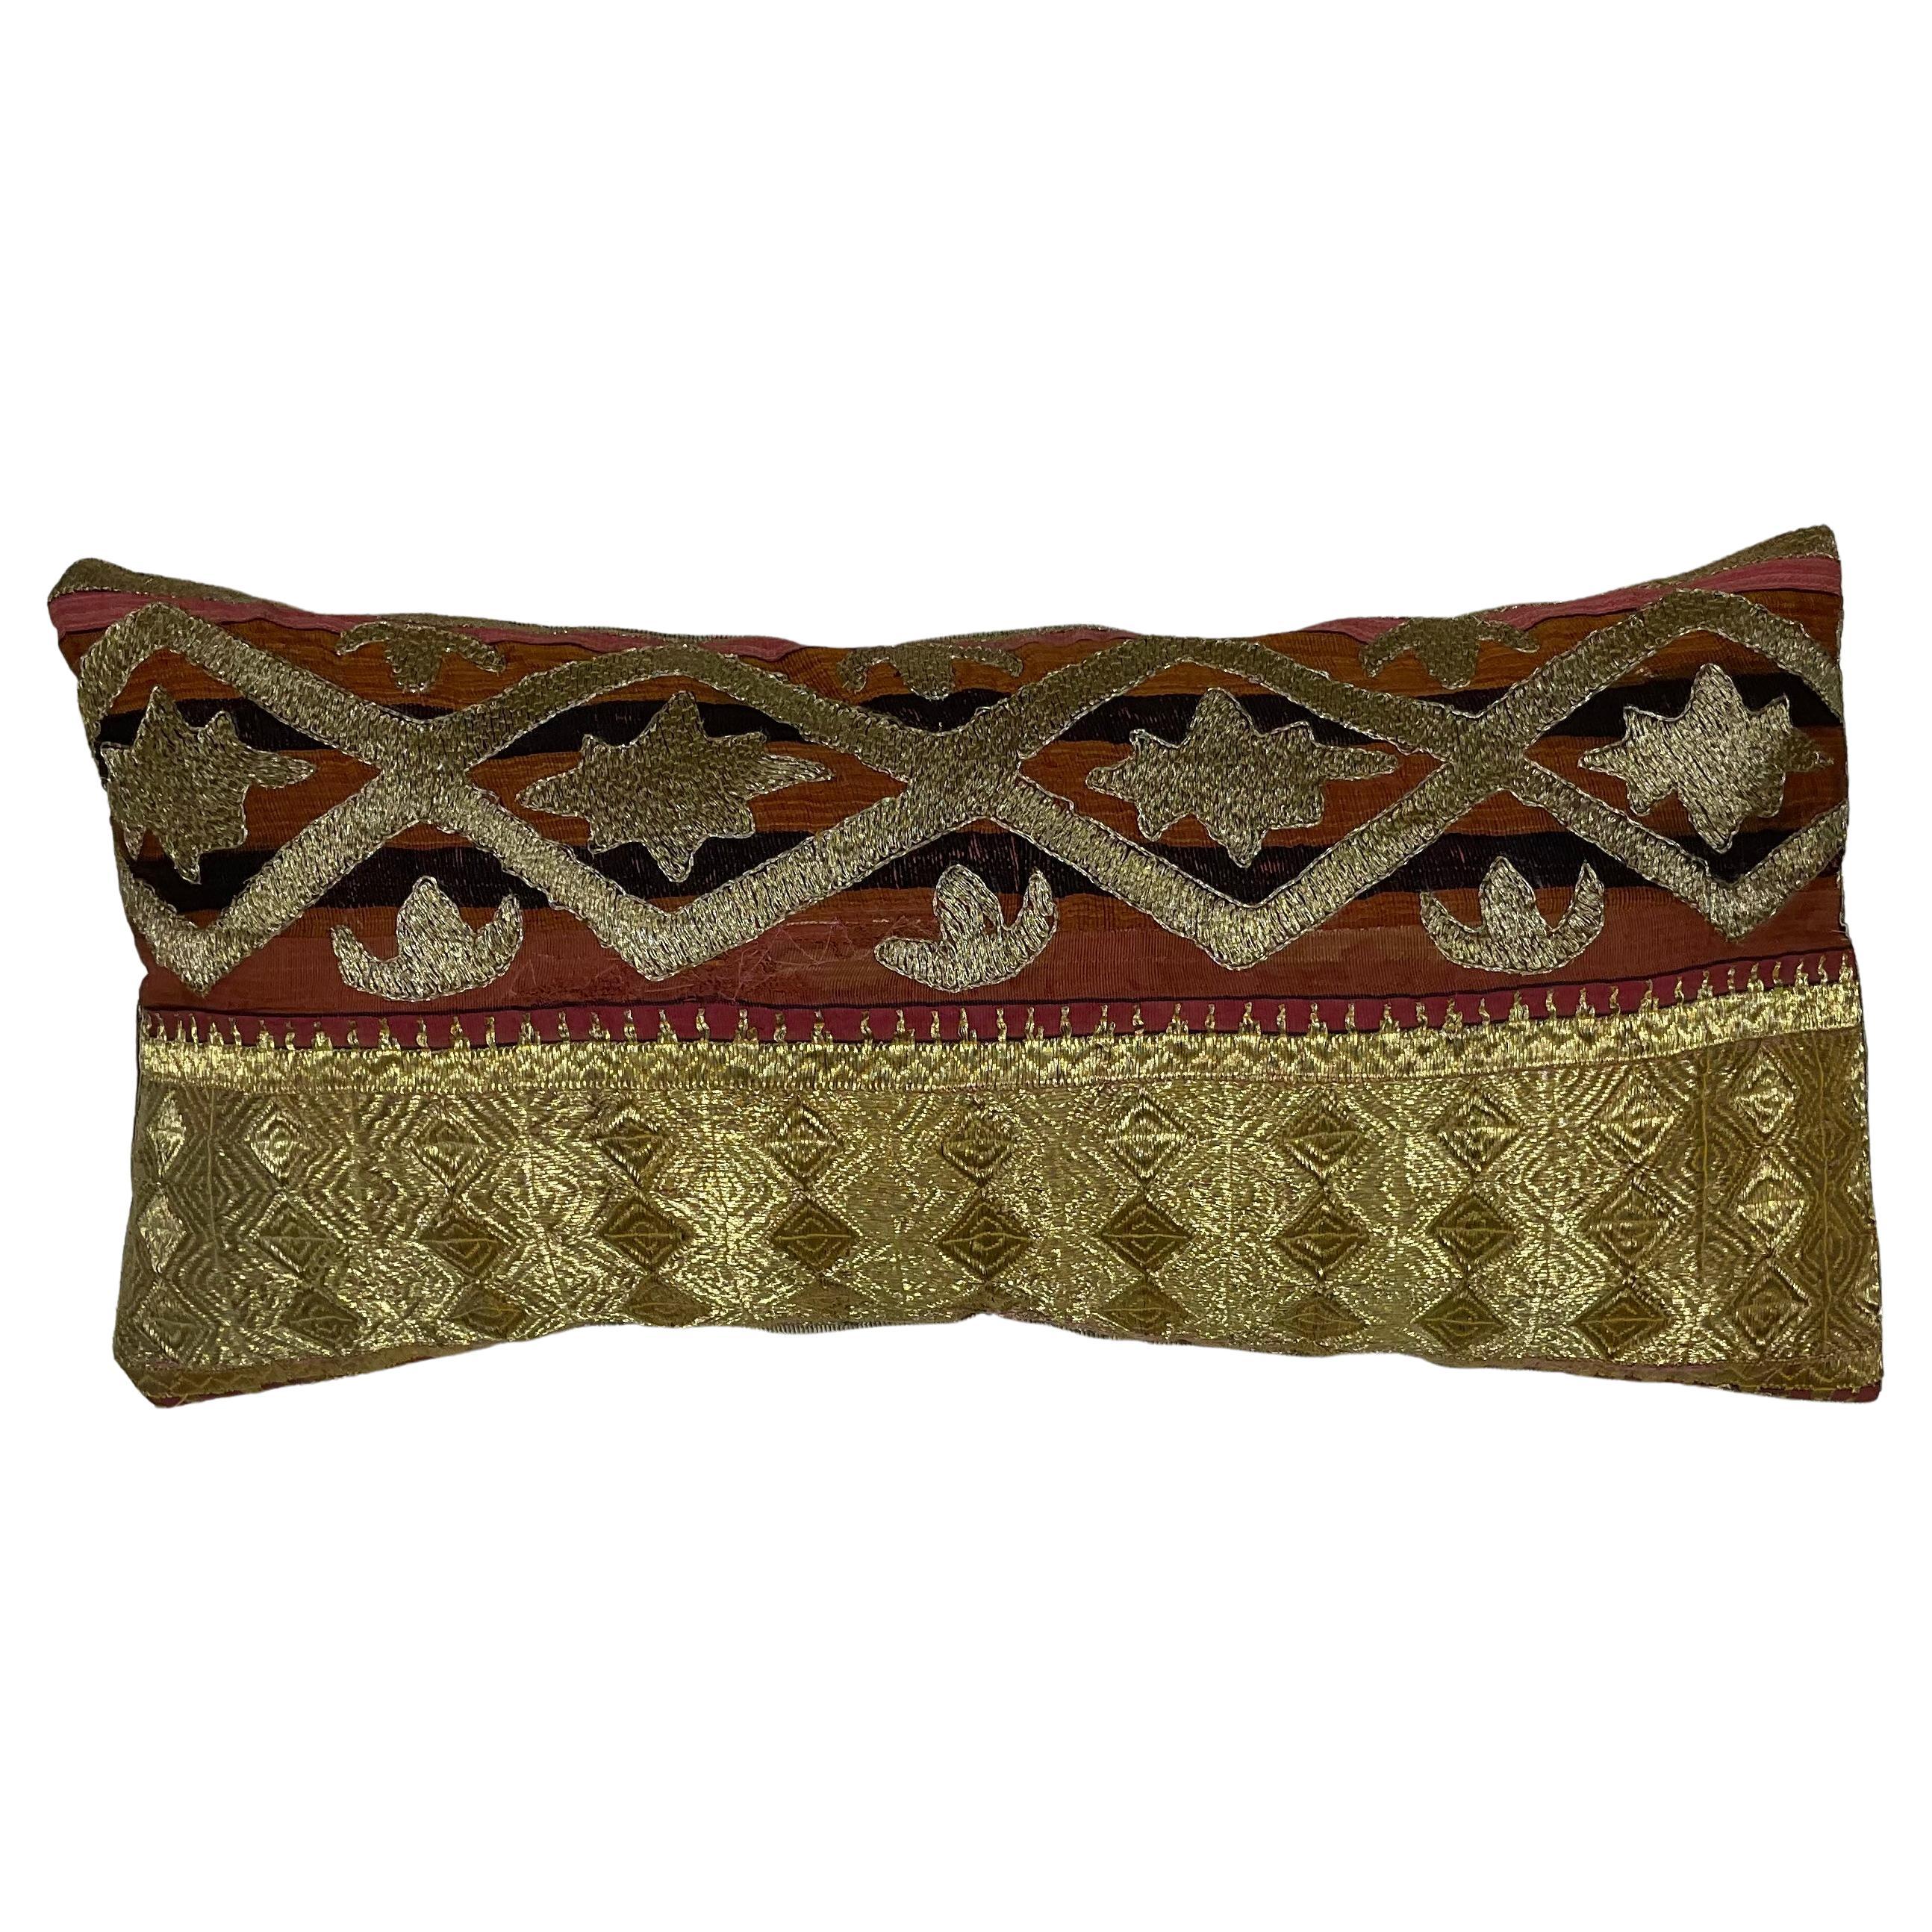 Single Antique Embroidery Textile Pillow